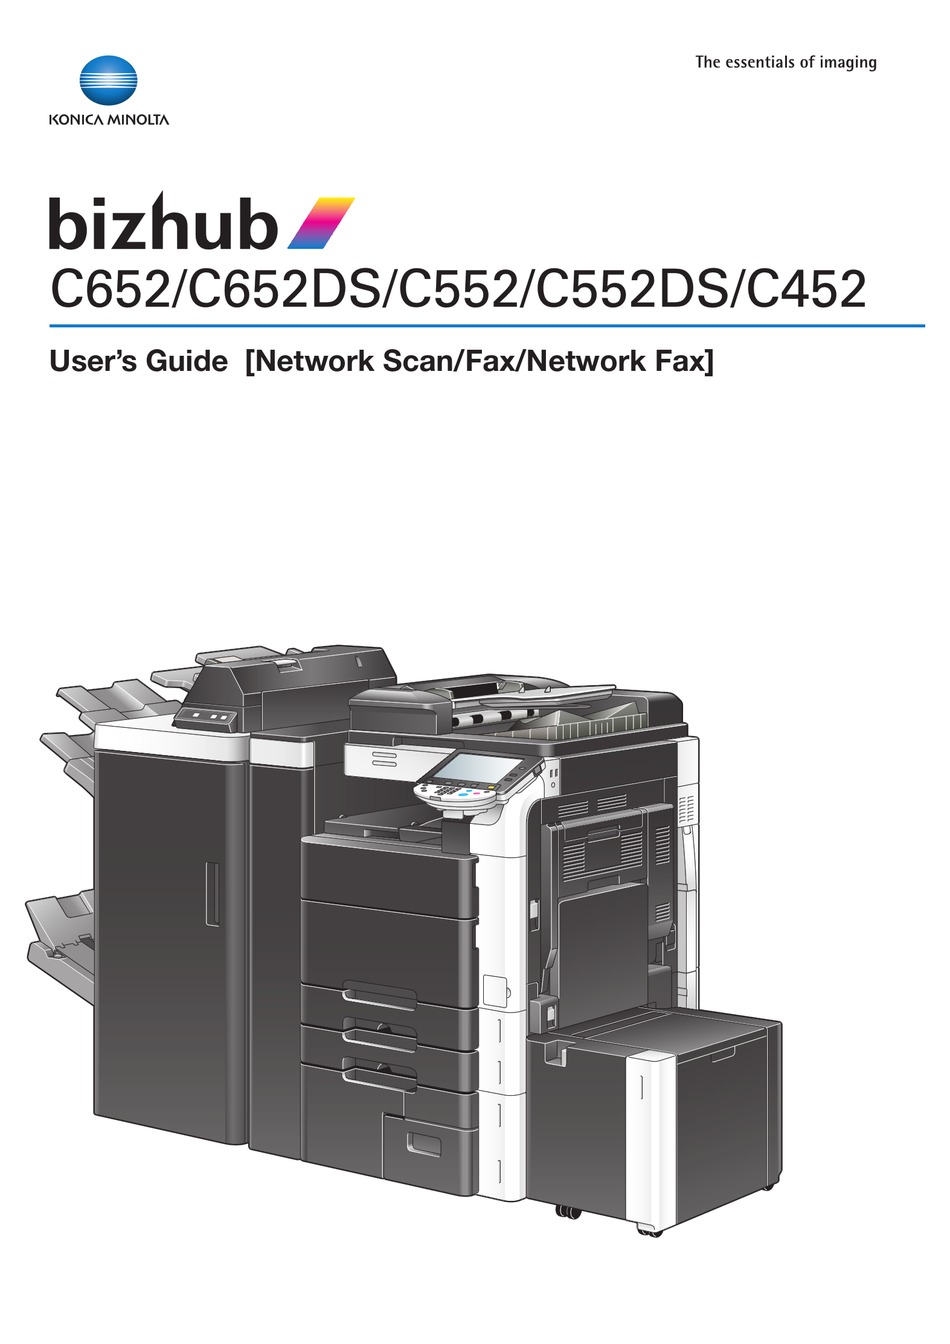 bizhub c452 can it print on black